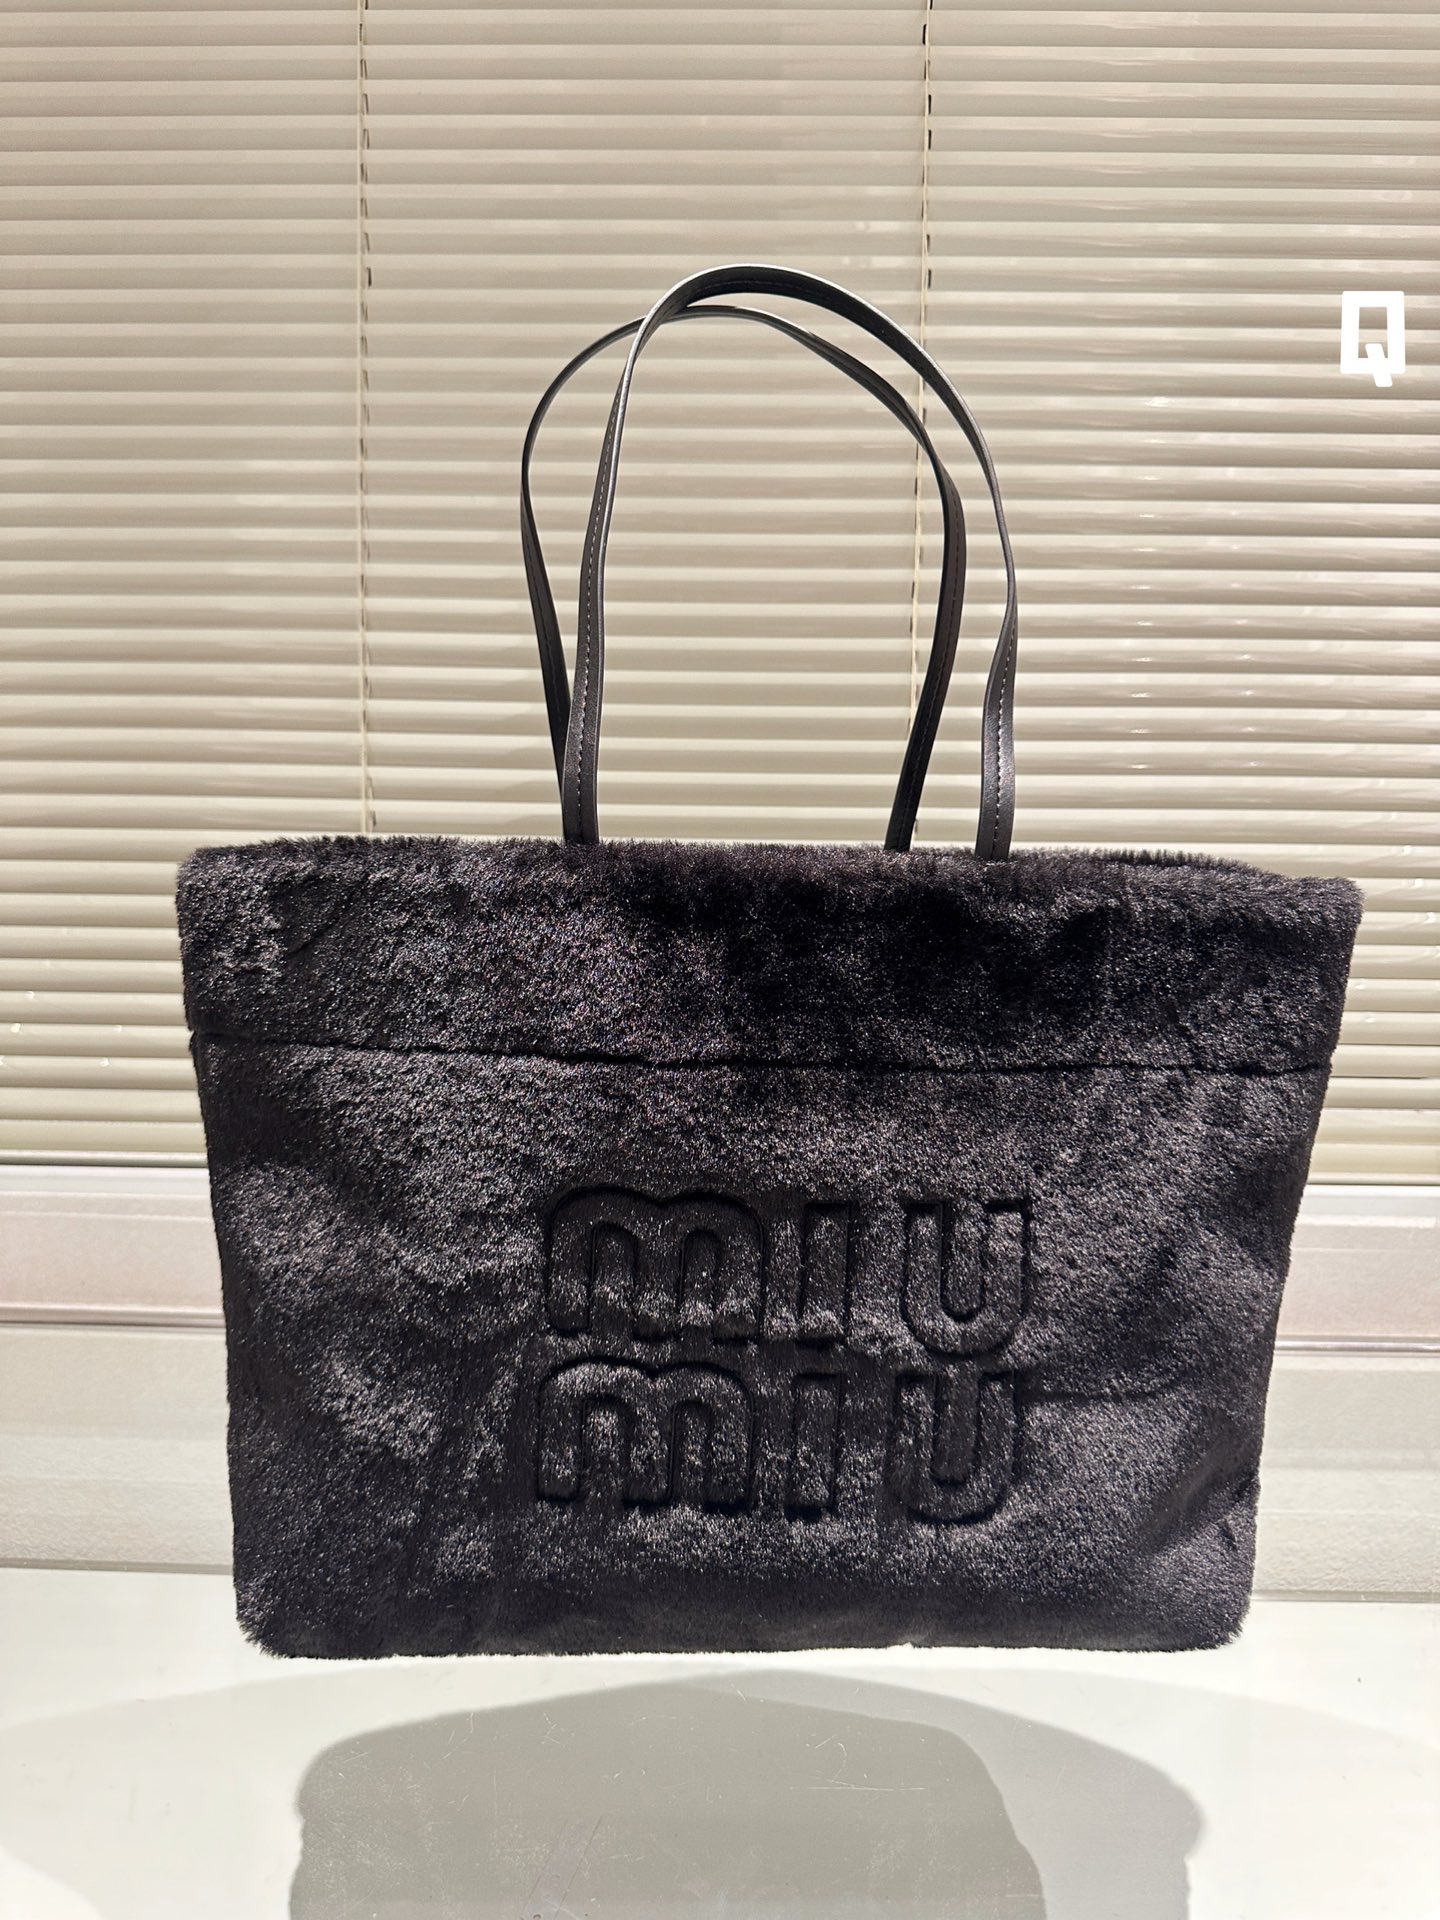 Miumiu New Product Maomao Shopping Bag